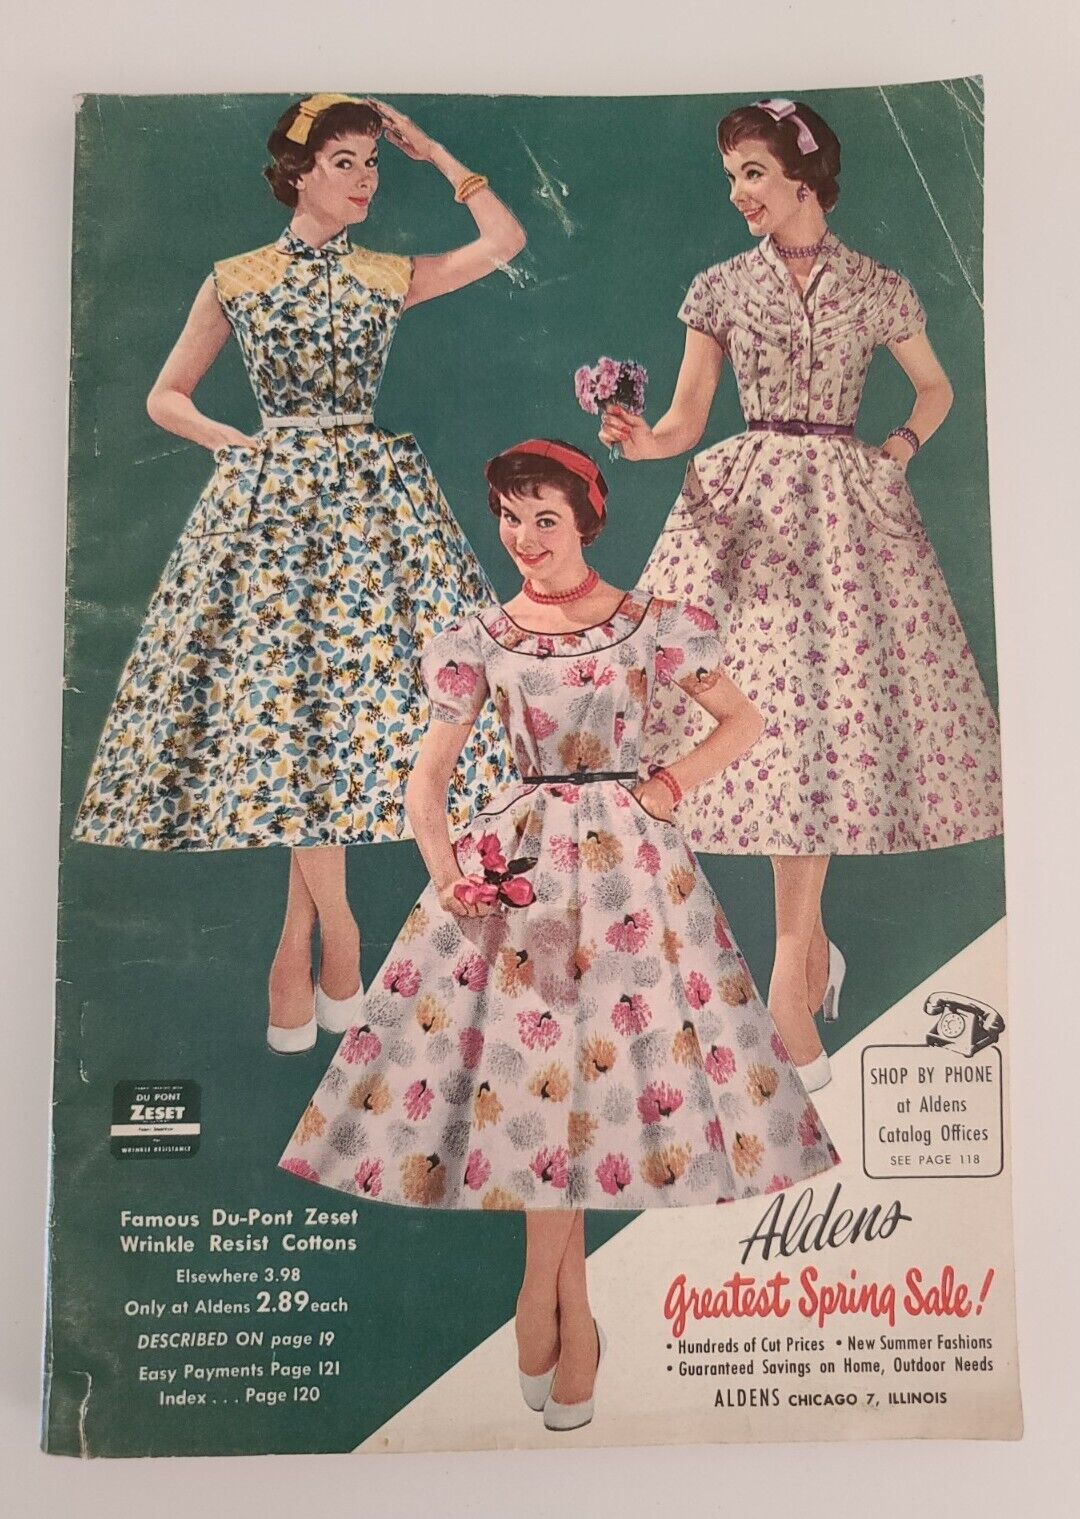 vintage 1950s Aldens Chicago Department Store Catalog Advertising